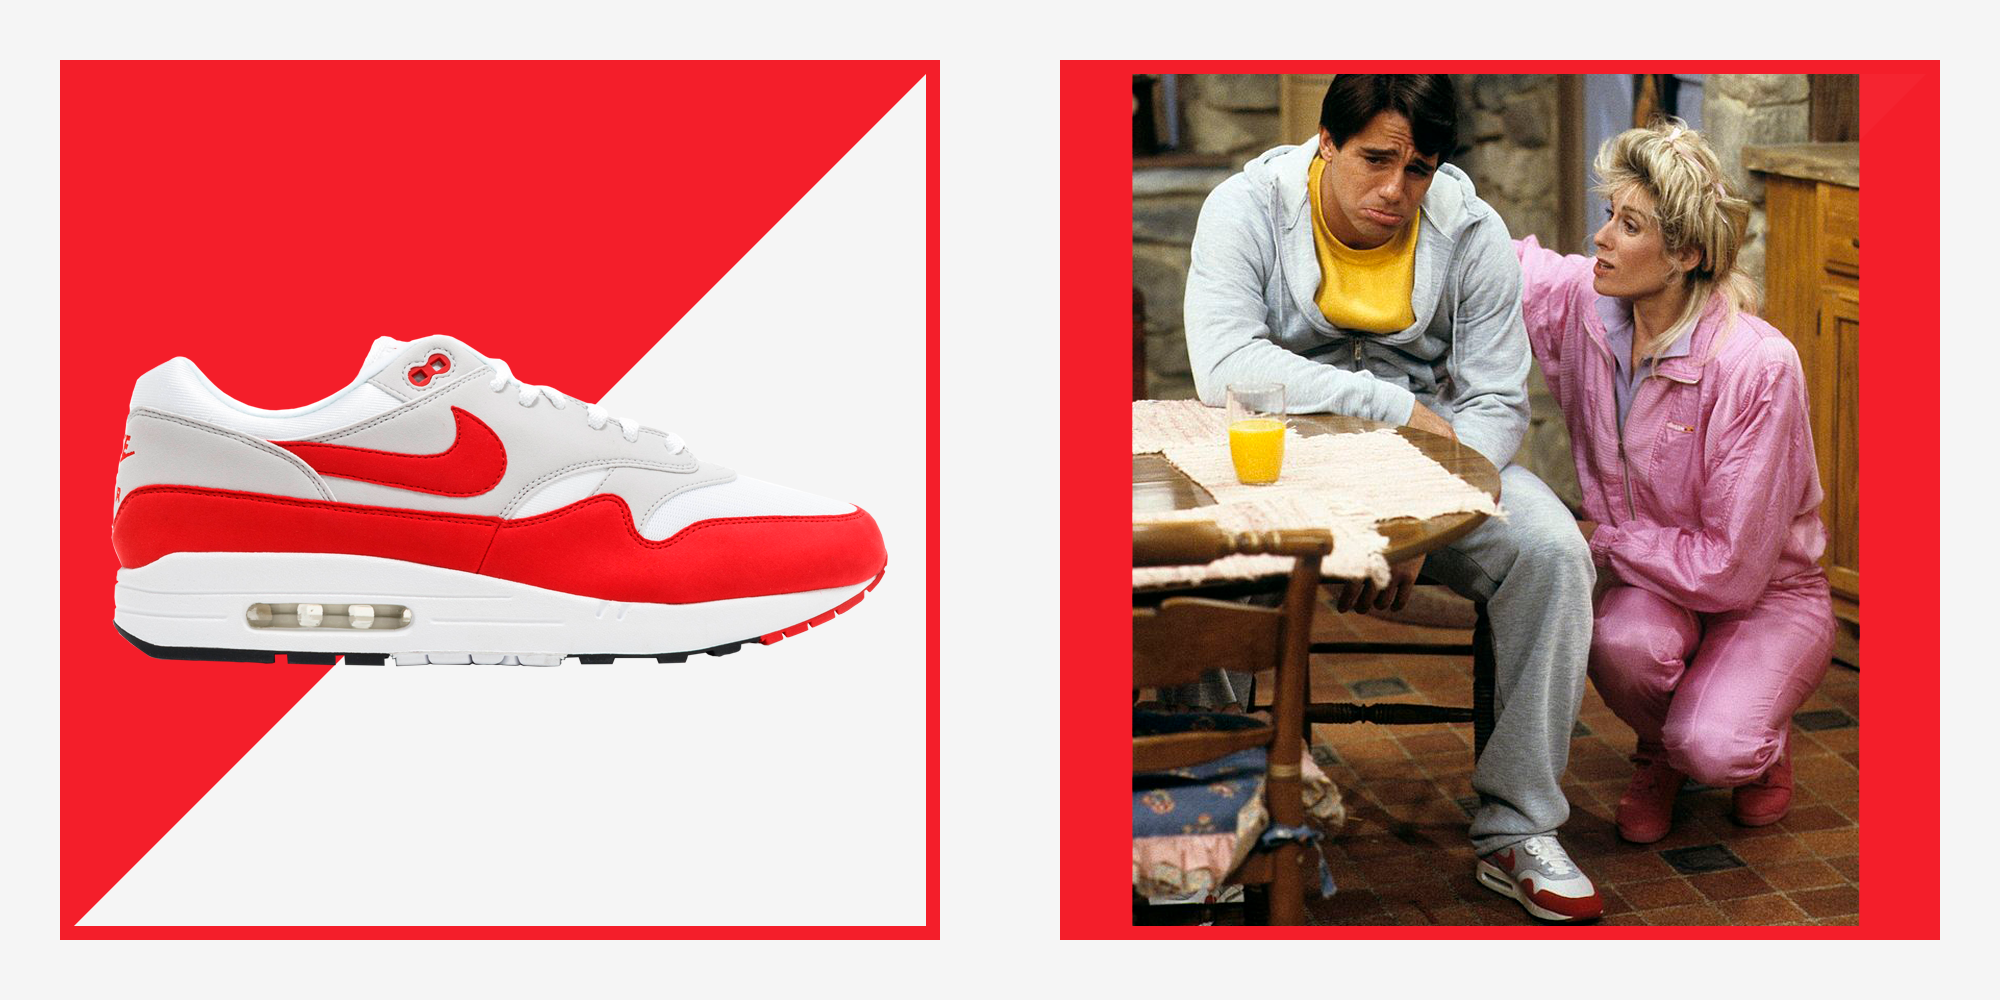 Nike Air Max 270 React & More Best Instagram Sneaker Photos